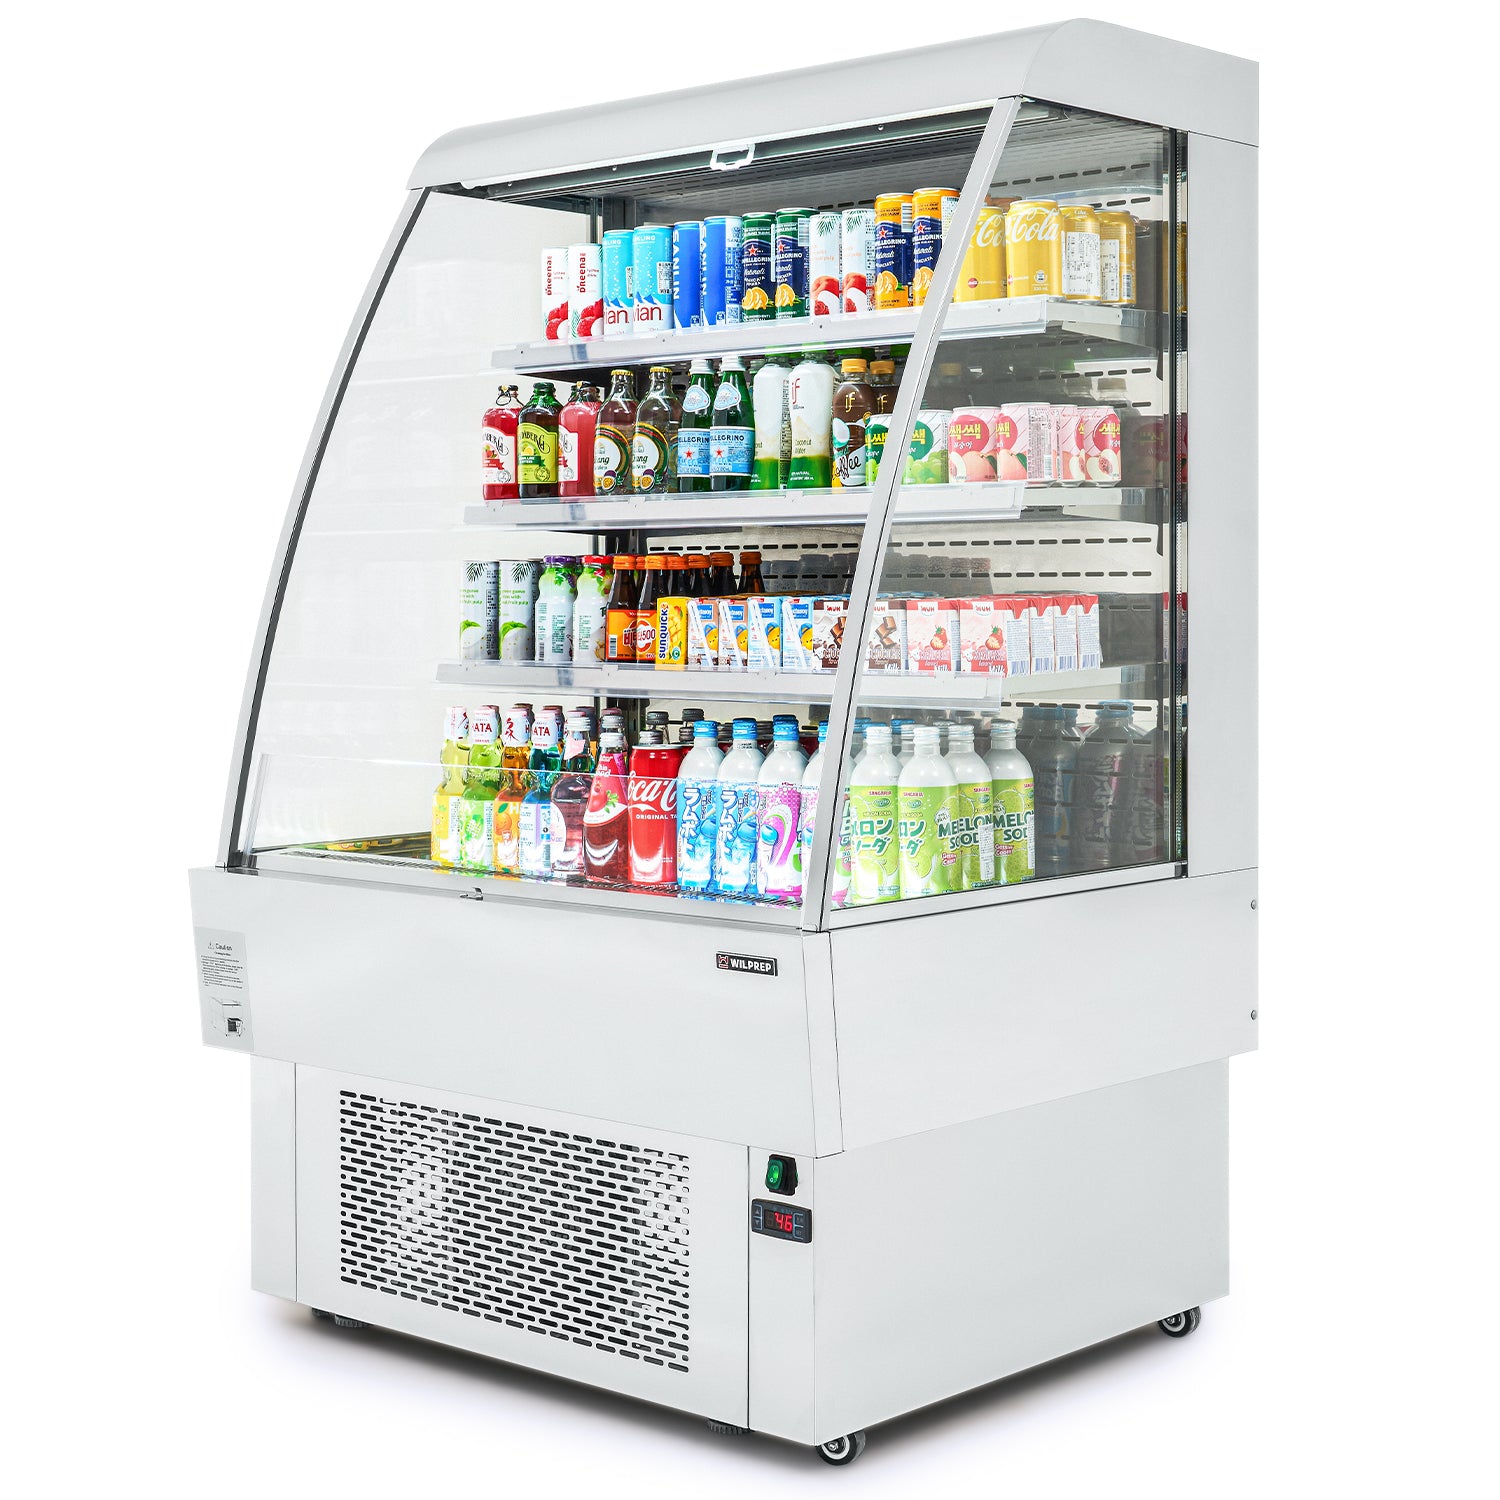 39" Vertical Open Air Merchandiser Refrigerator 13.4 cu. ft. Capacity